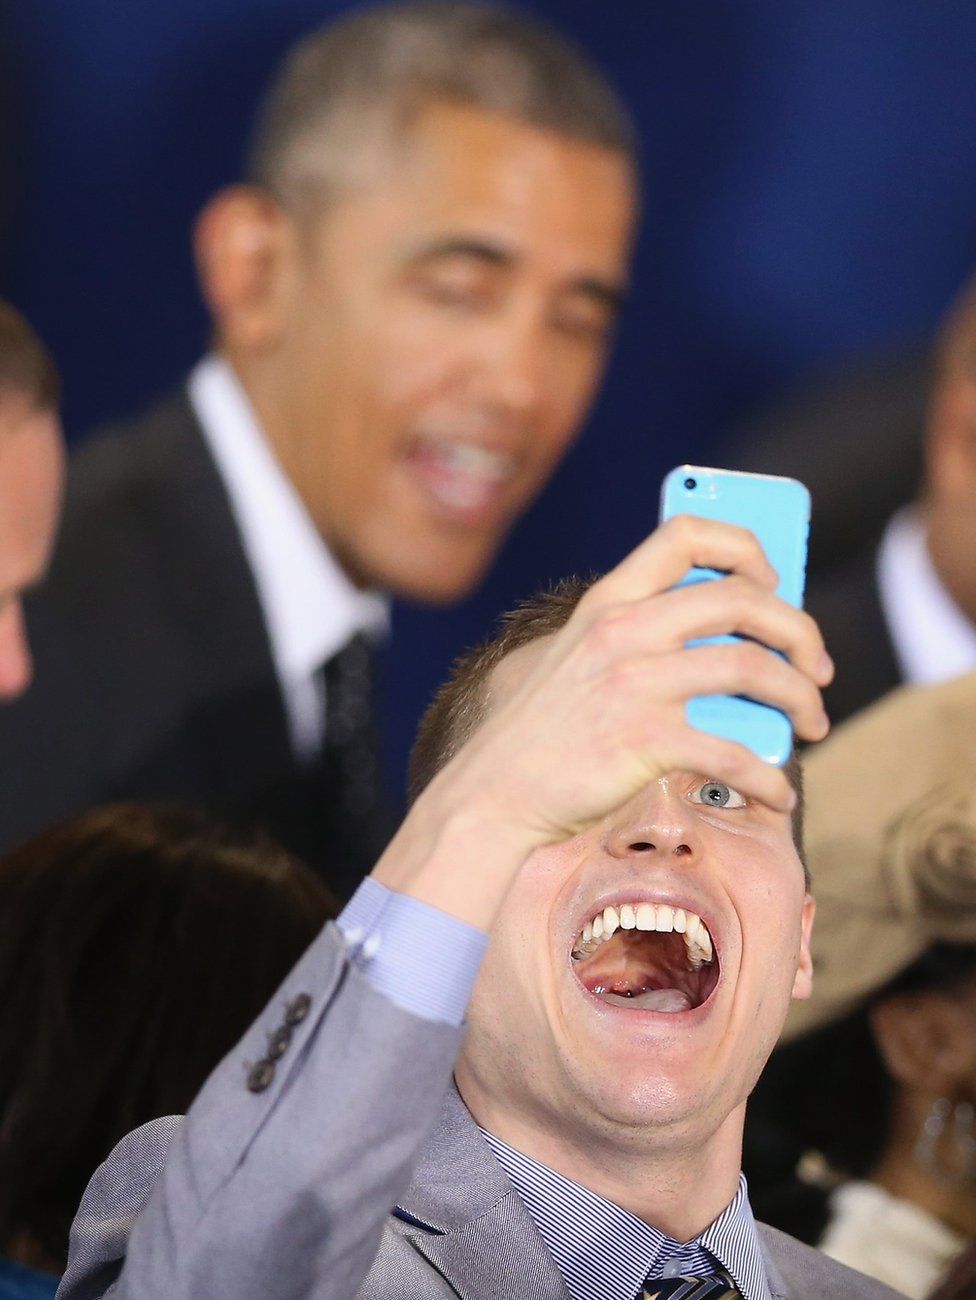 A man takes a selfie as US President Barack Obama walks past